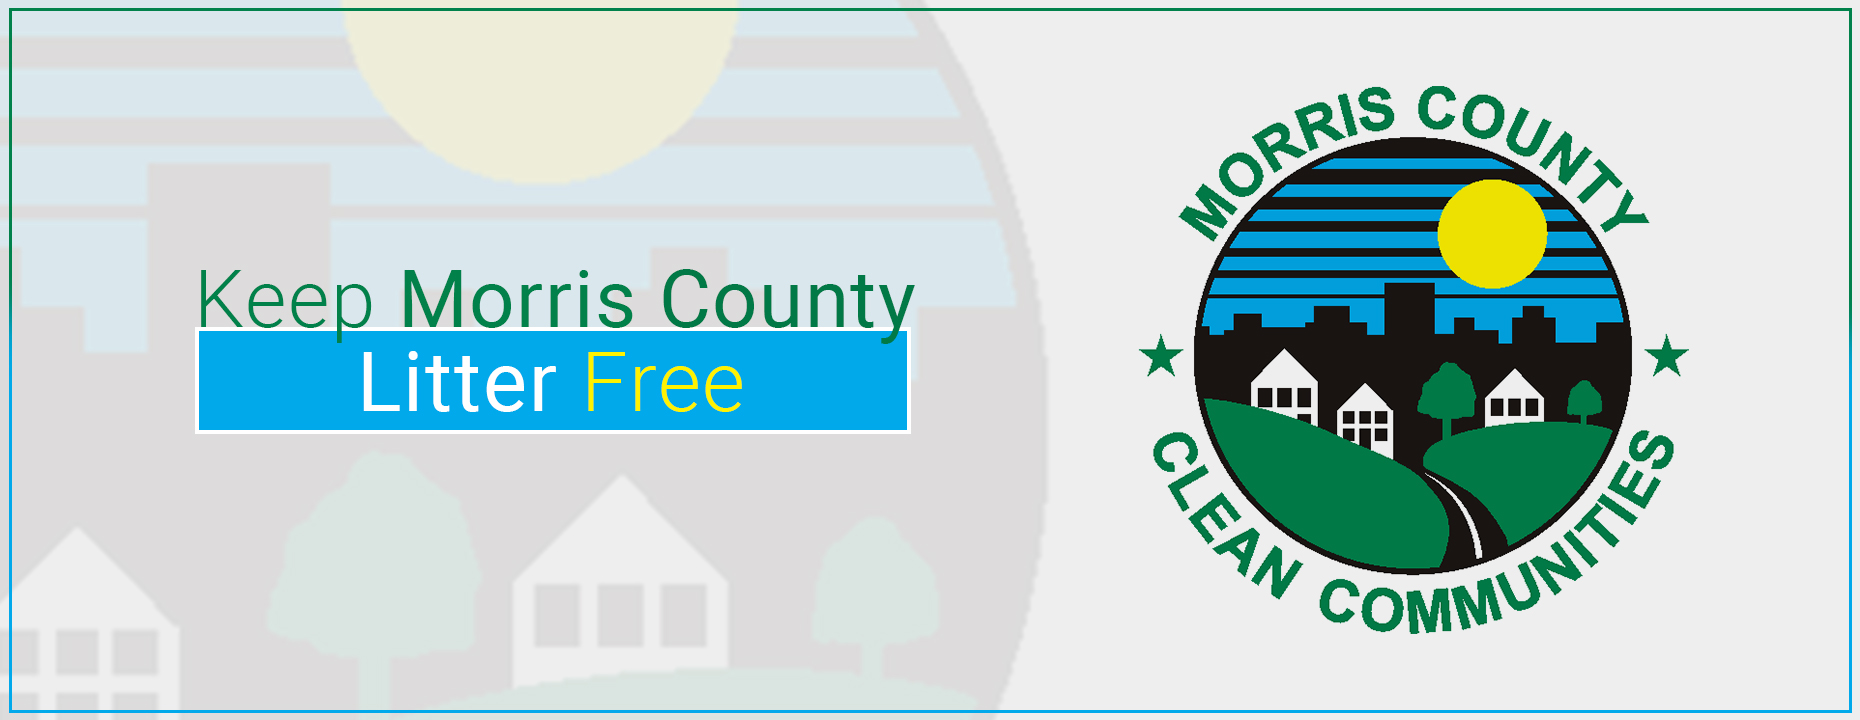 Keep Morris County Litter Free